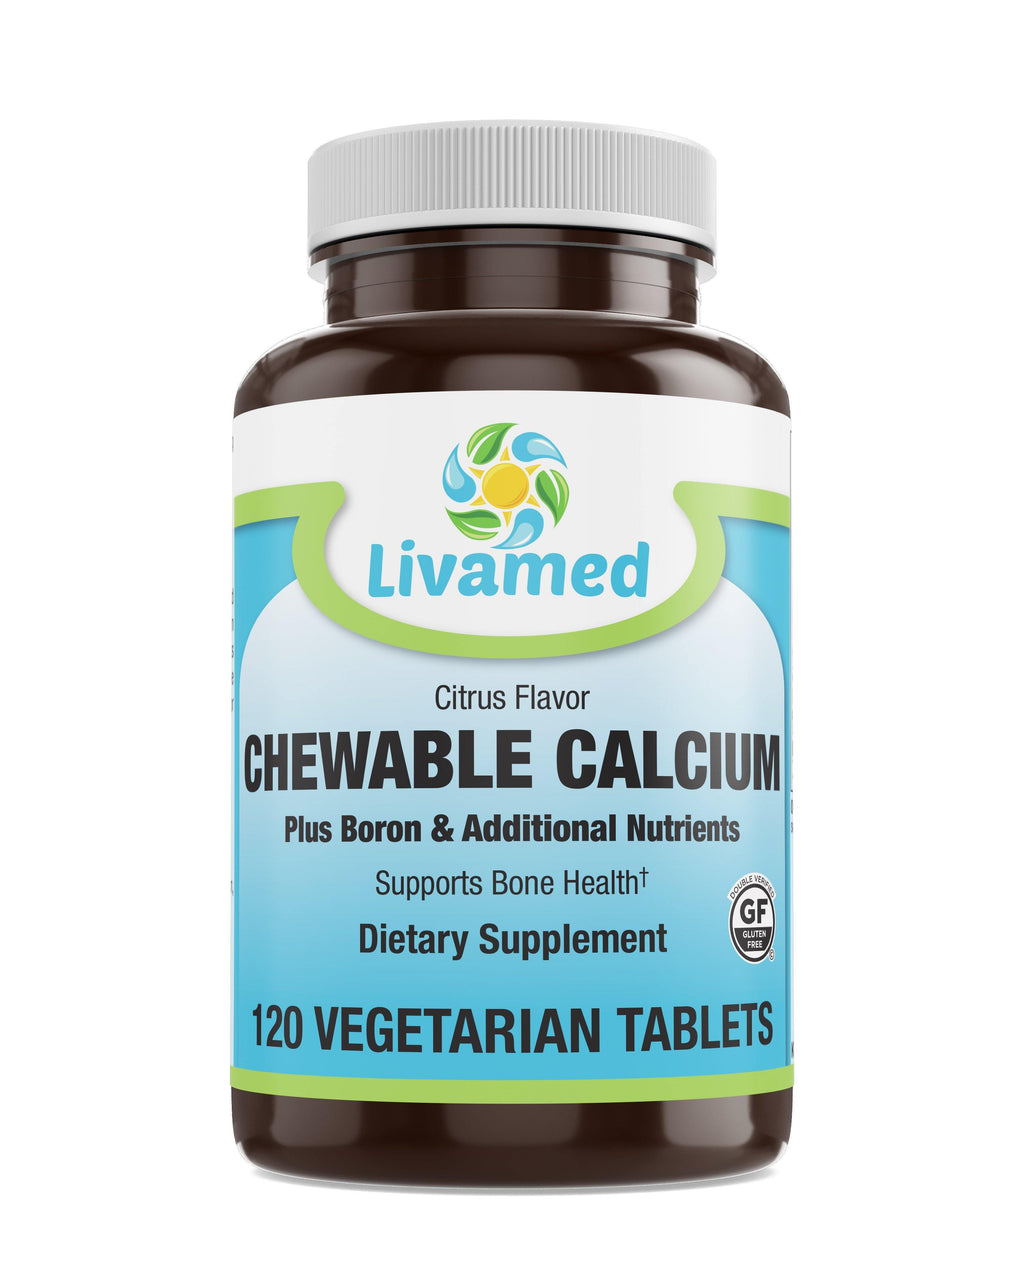 Livamed - Chewable Calcium Veg Tabs - Natural Citrus Flavor 120 Count - Livamed Vitamins